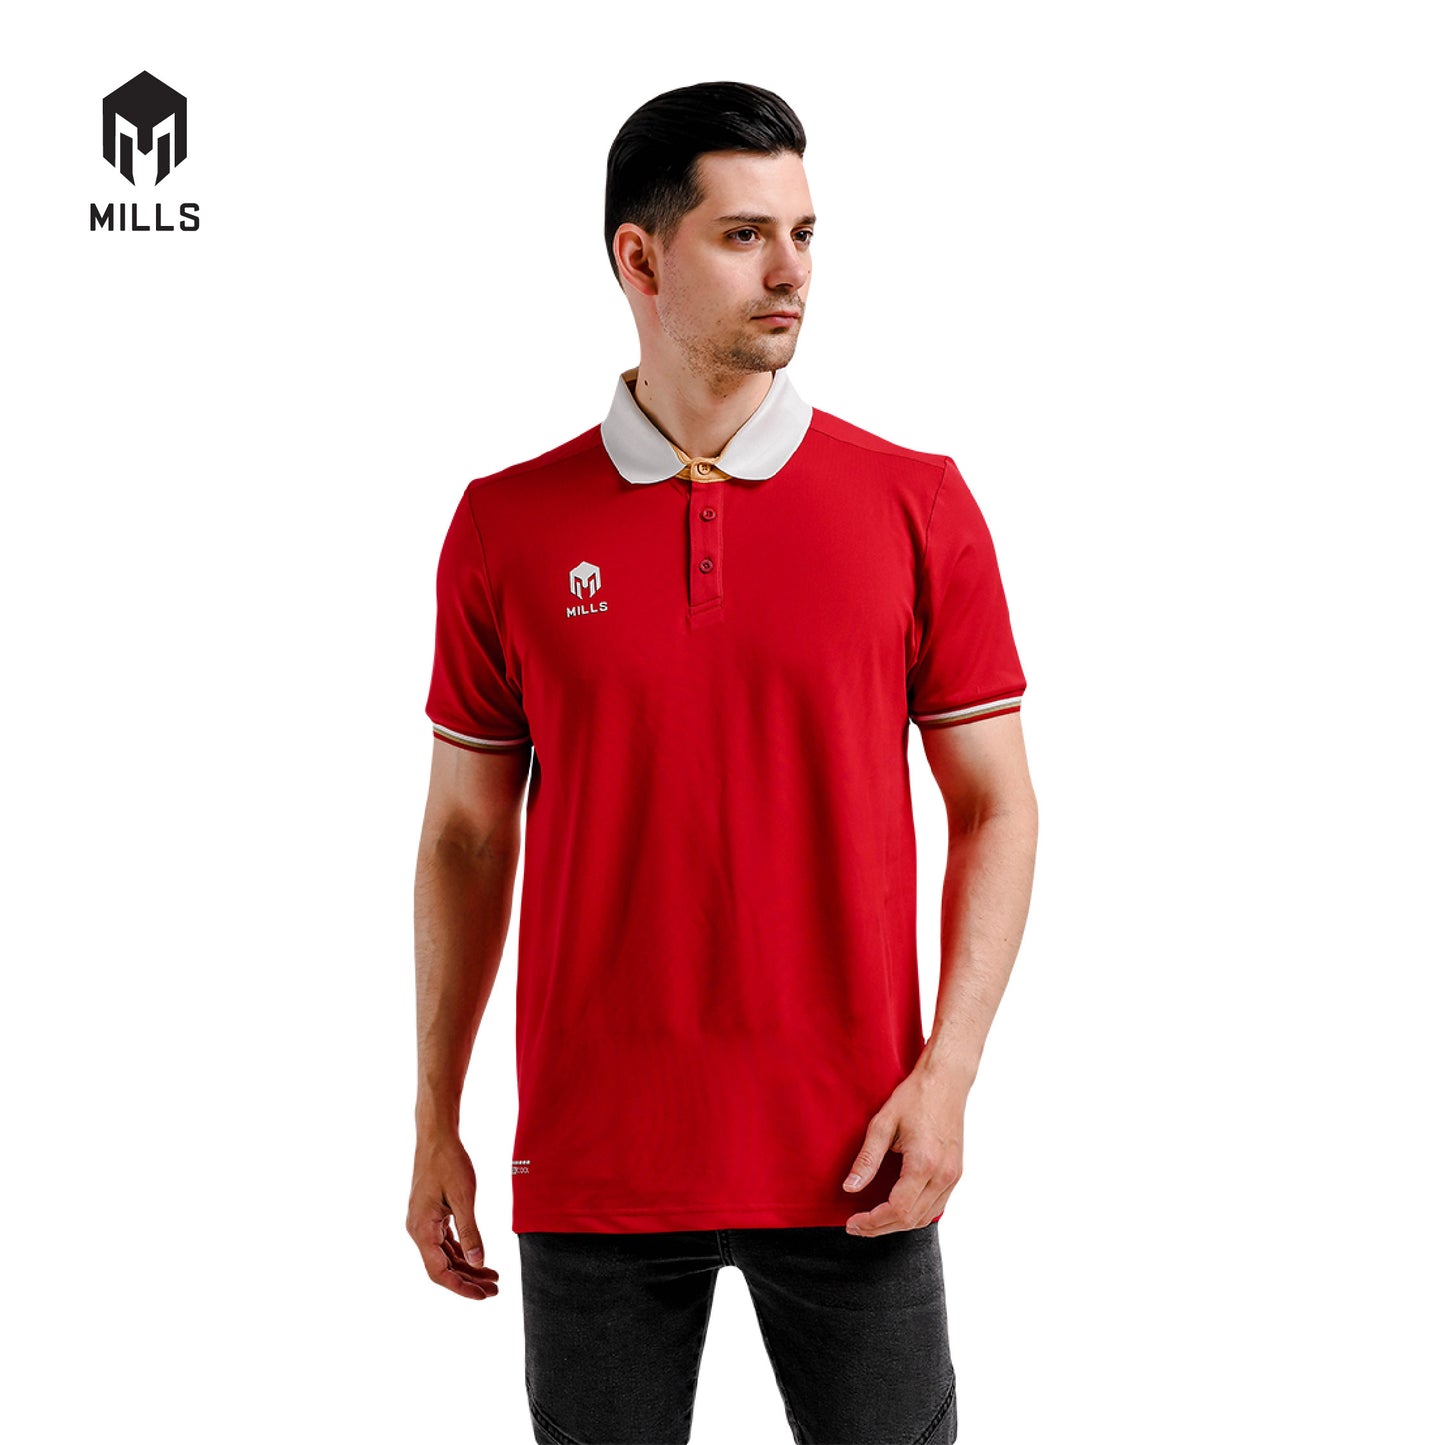 Mills Polo Shirt Style Pluto 17052